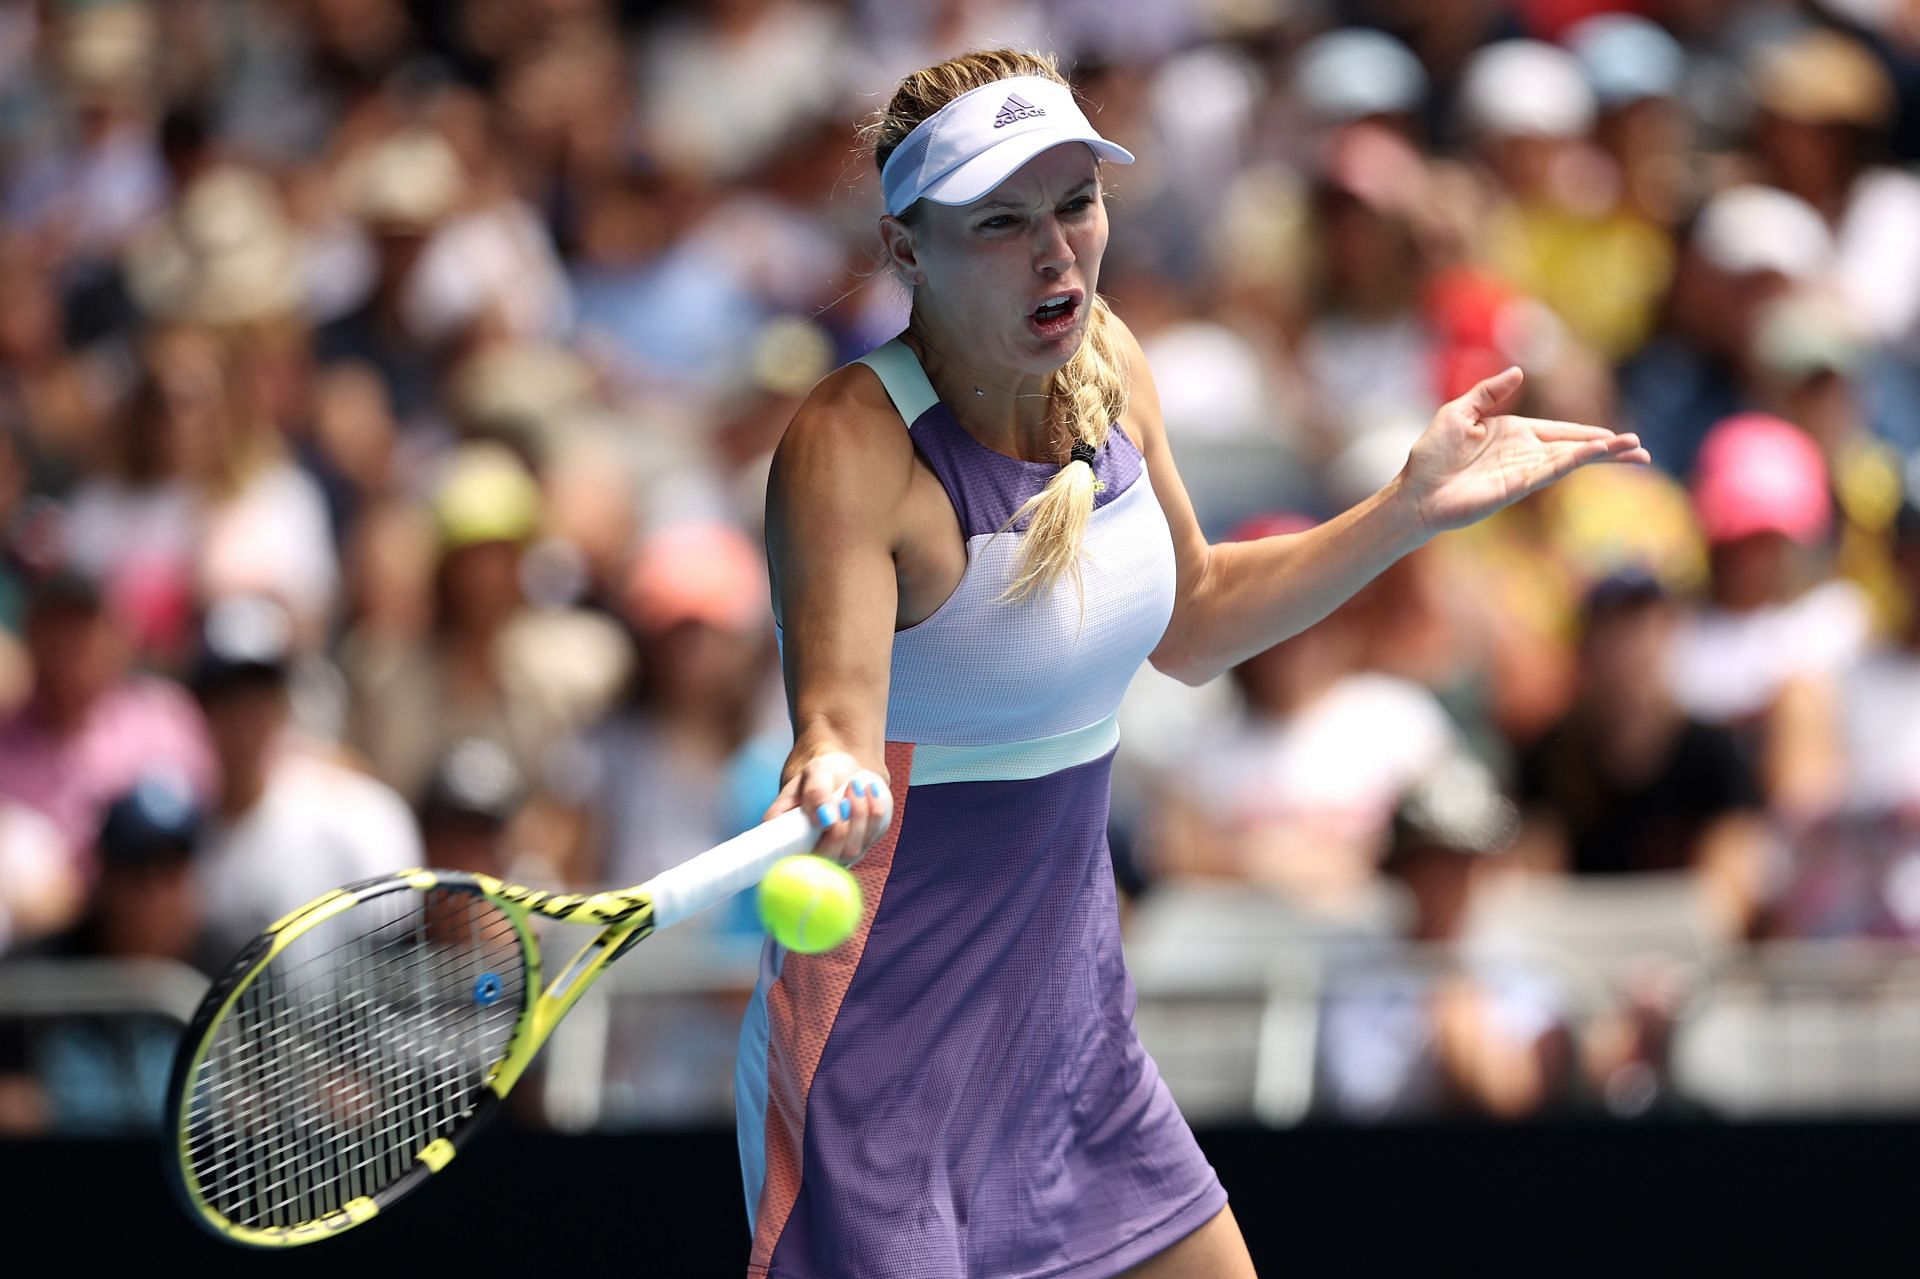 The Danish superstar ended her tennis career at the 2020 Australian Open.